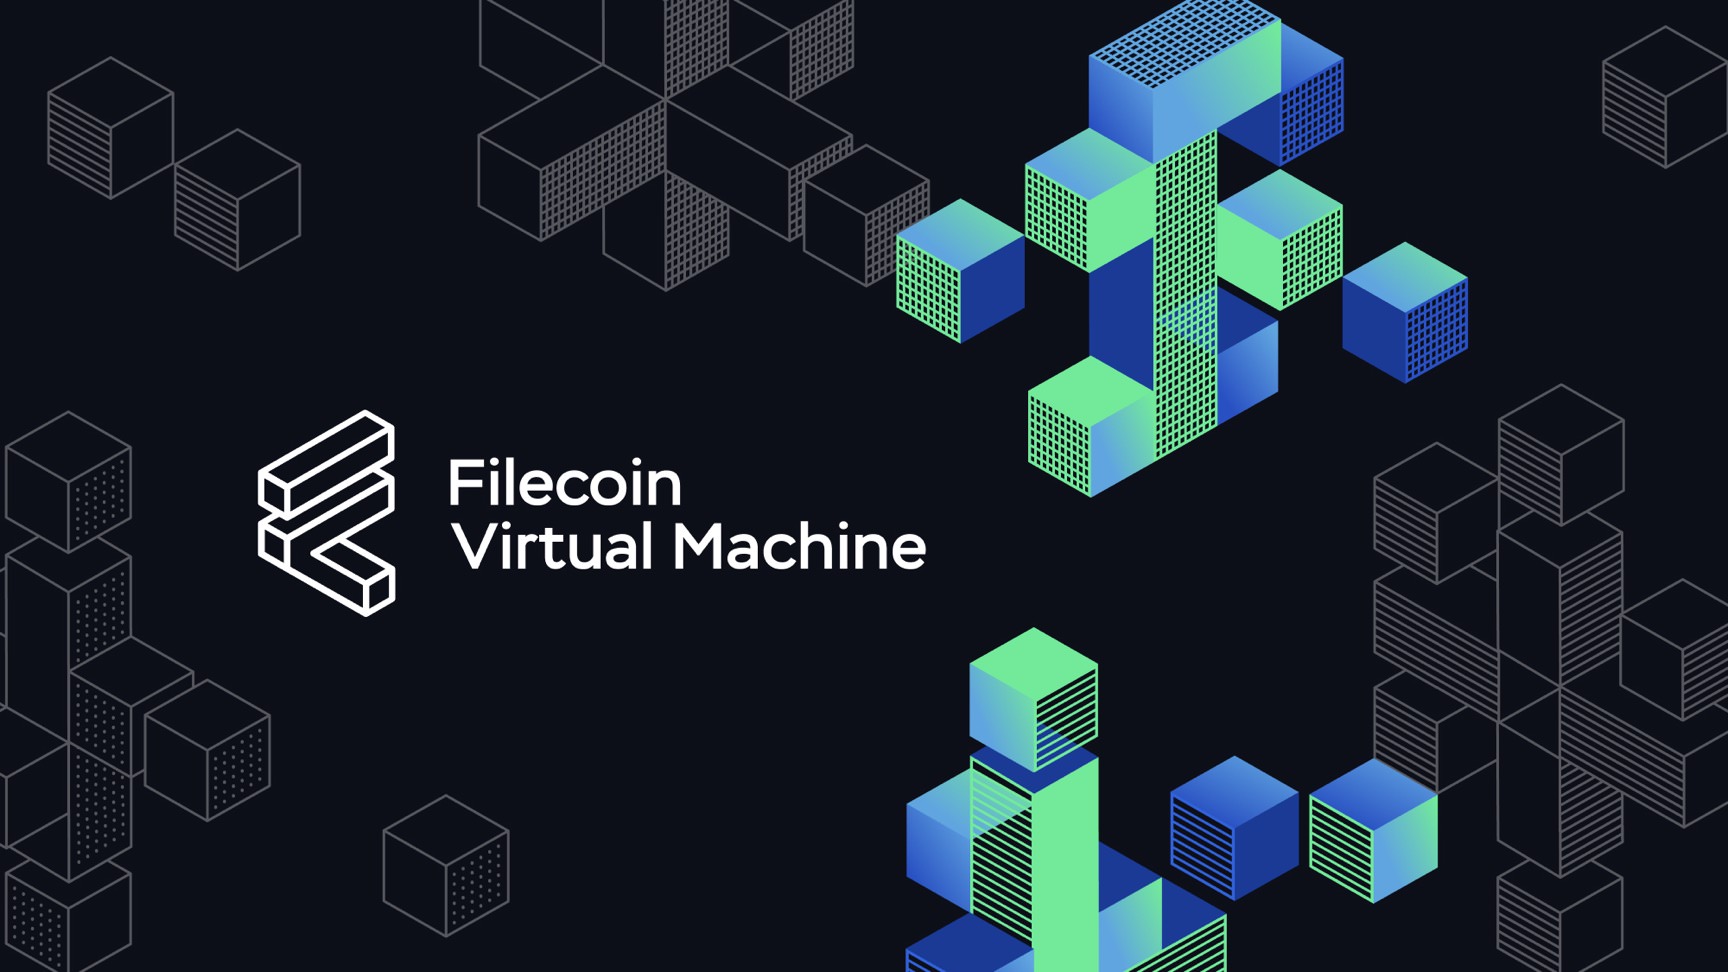 Filecoin Virtual Machine. Source: Filecoin.